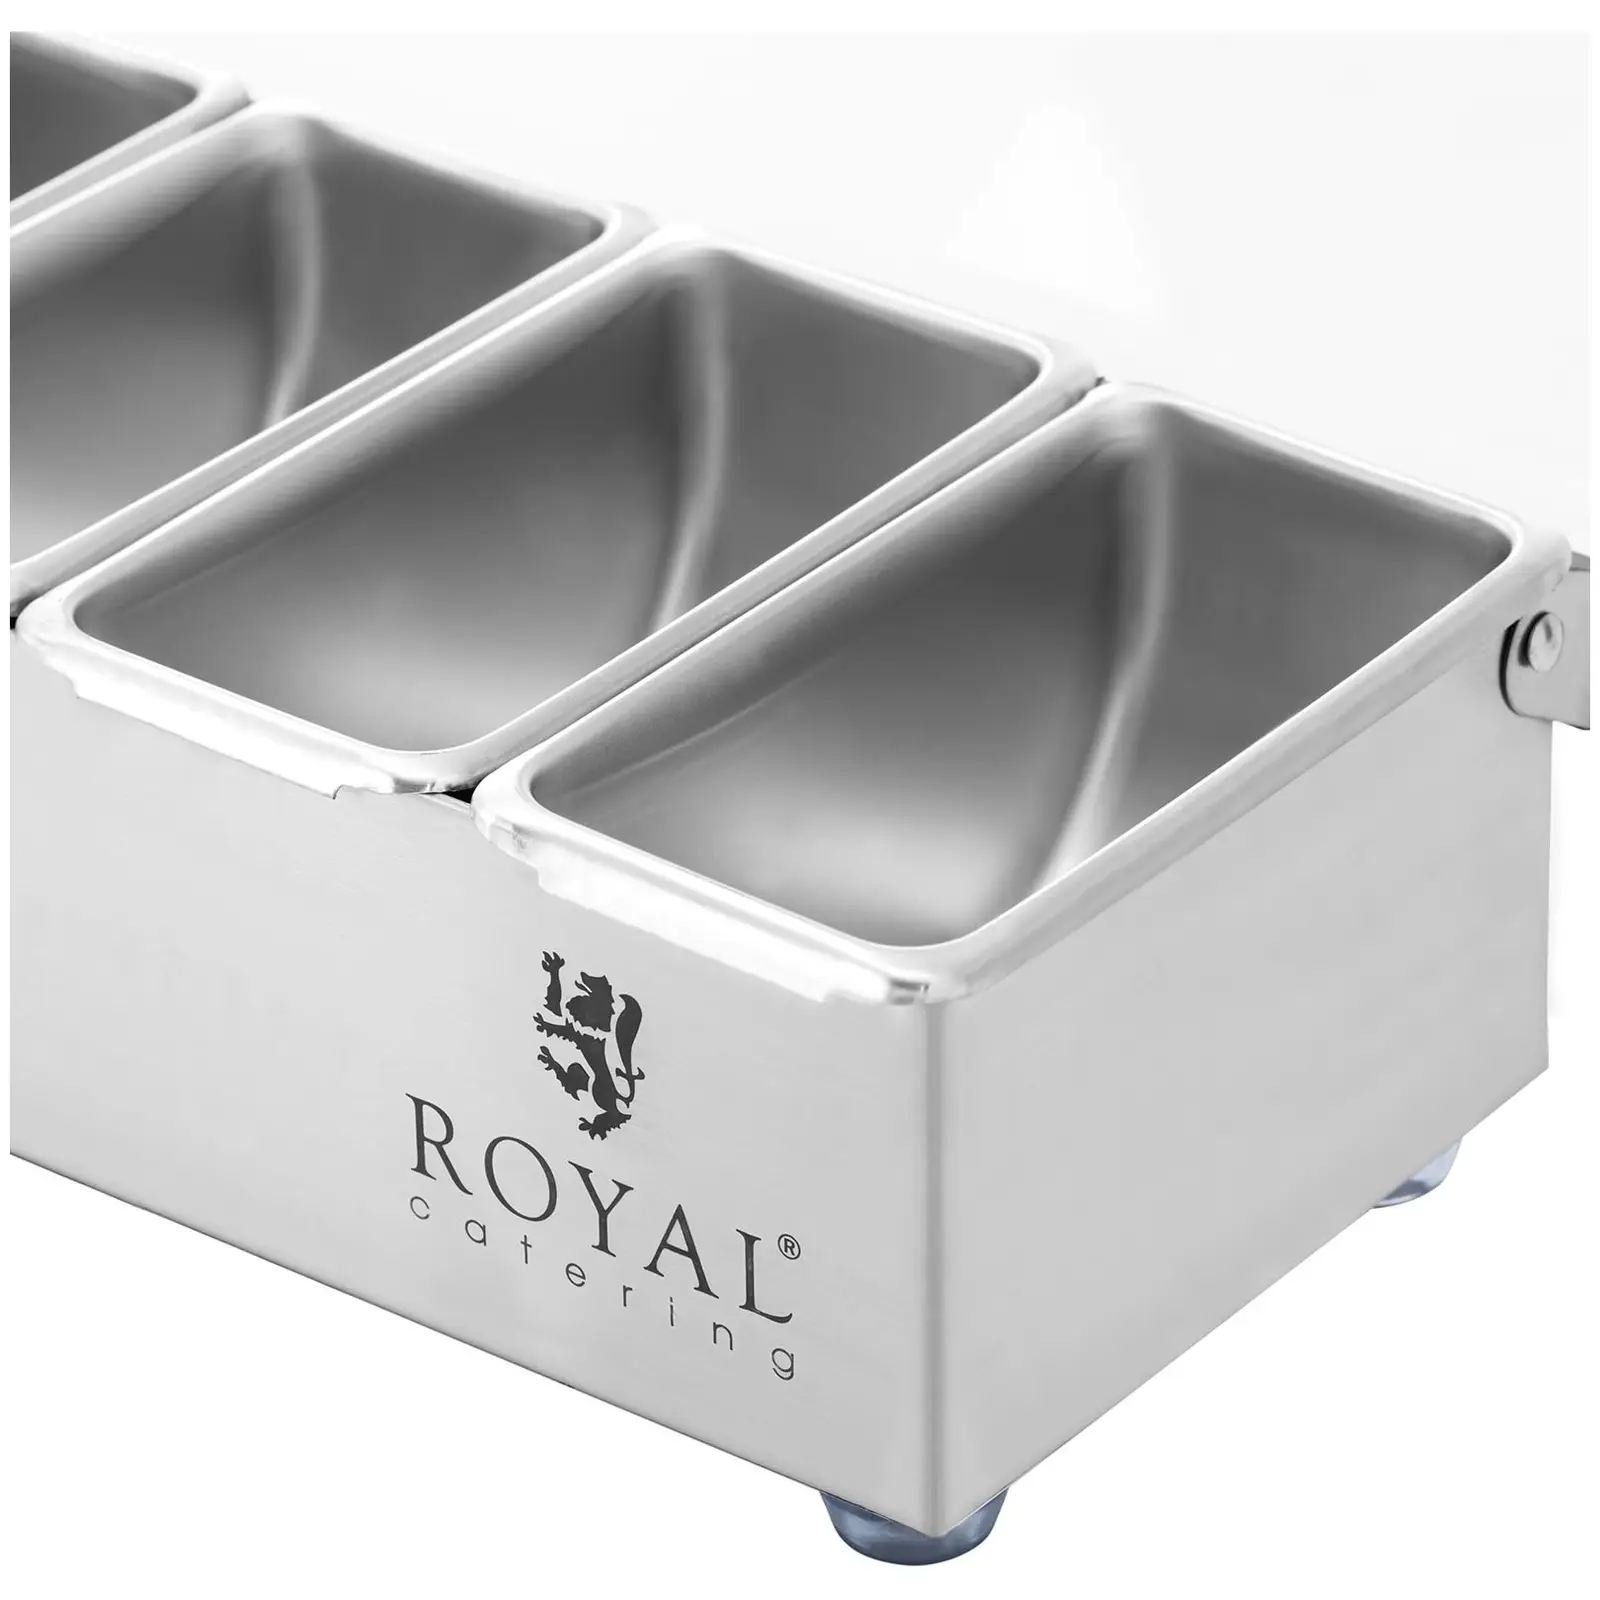 Ingrediensbehållare - Rostfritt stål - 5 x 0,4 L - Royal Catering